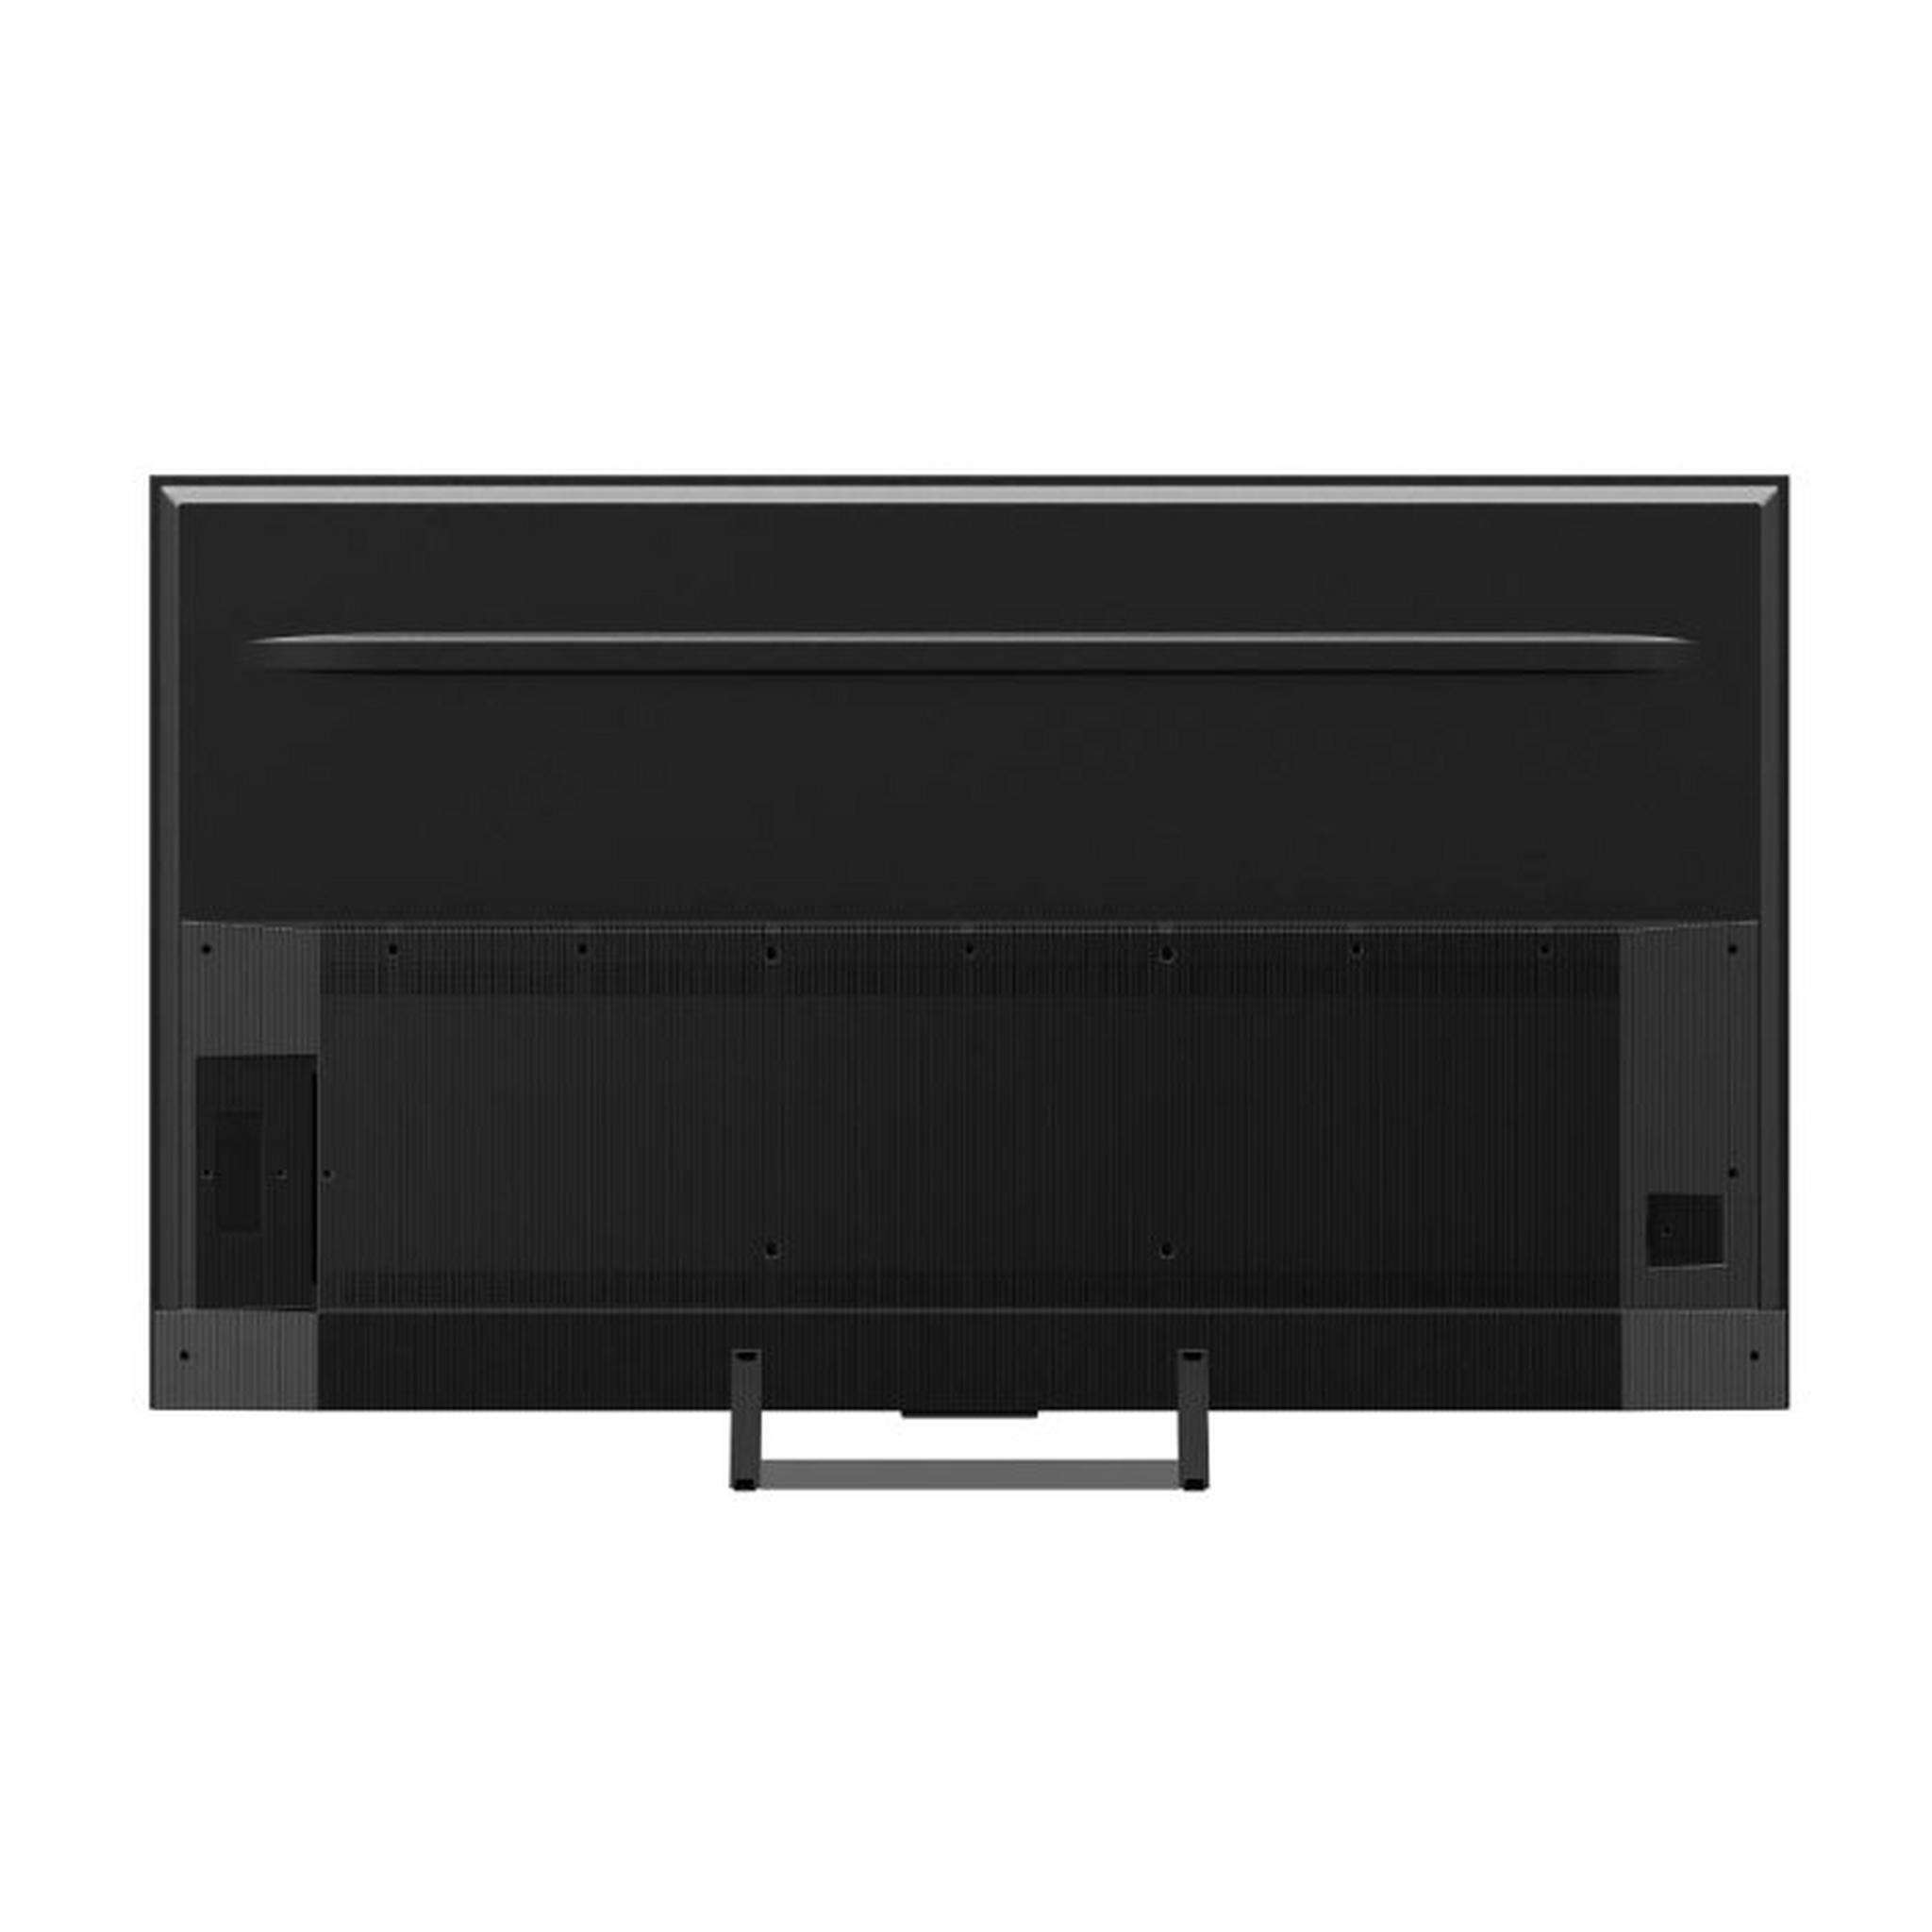 TCL Google TV, 55inch, 4k UHD, QLED - 55C735